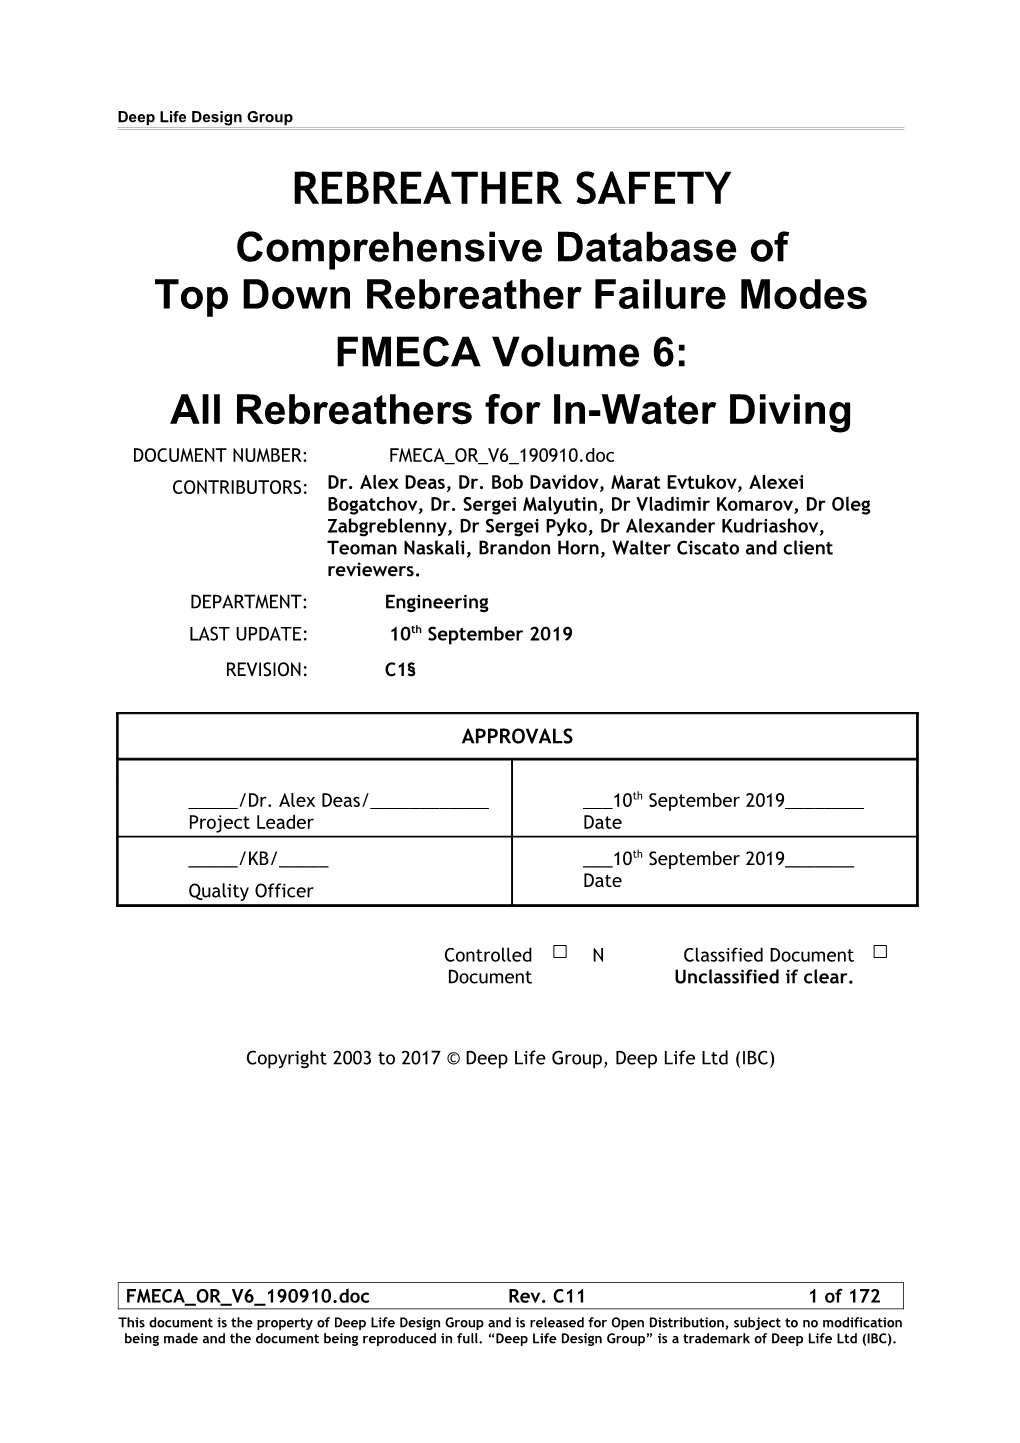 FMECA Volume 6: All Rebreathers for In-Water Diving DOCUMENT NUMBER: FMECA OR V6 190910.Doc CONTRIBUTORS: Dr